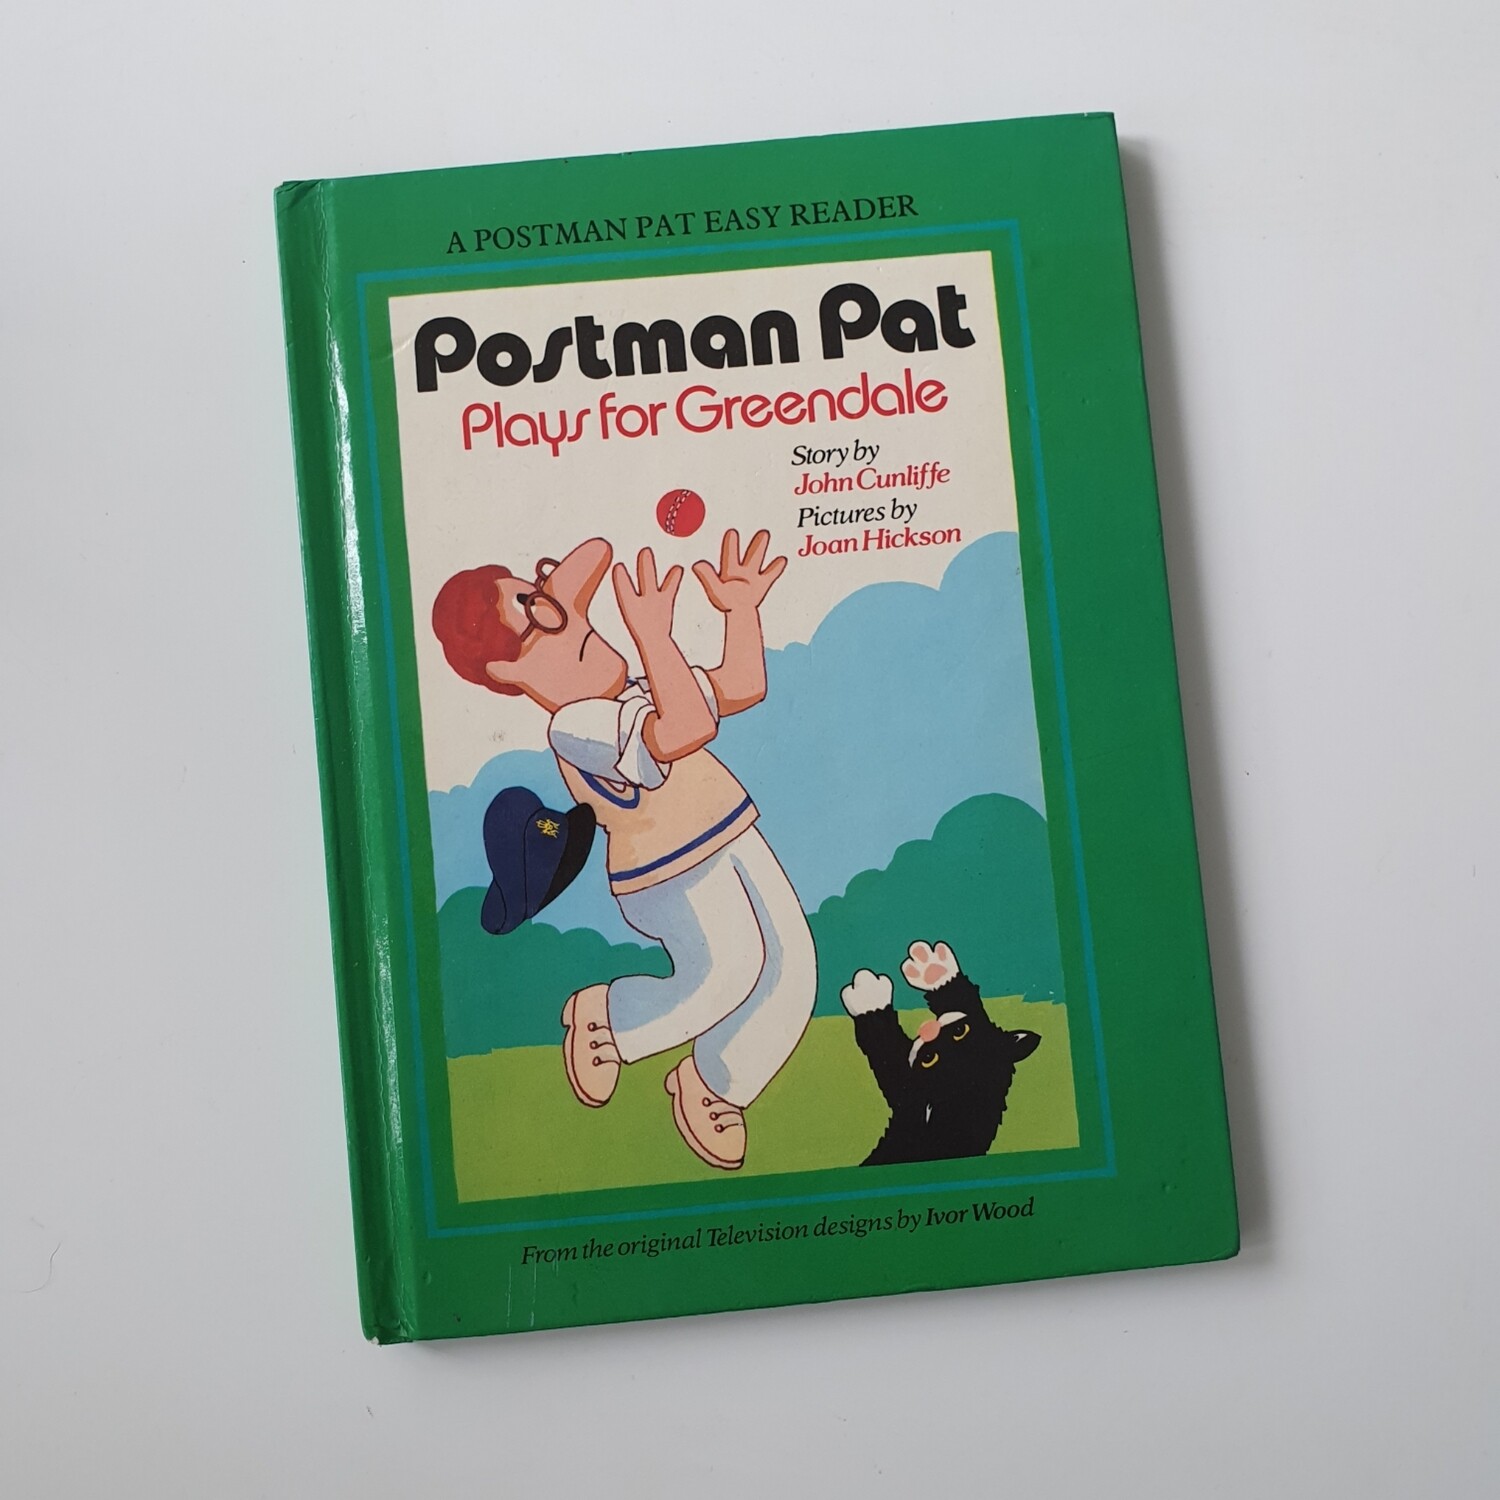 Postman Pat plays for Greendale Notebook - Cricket